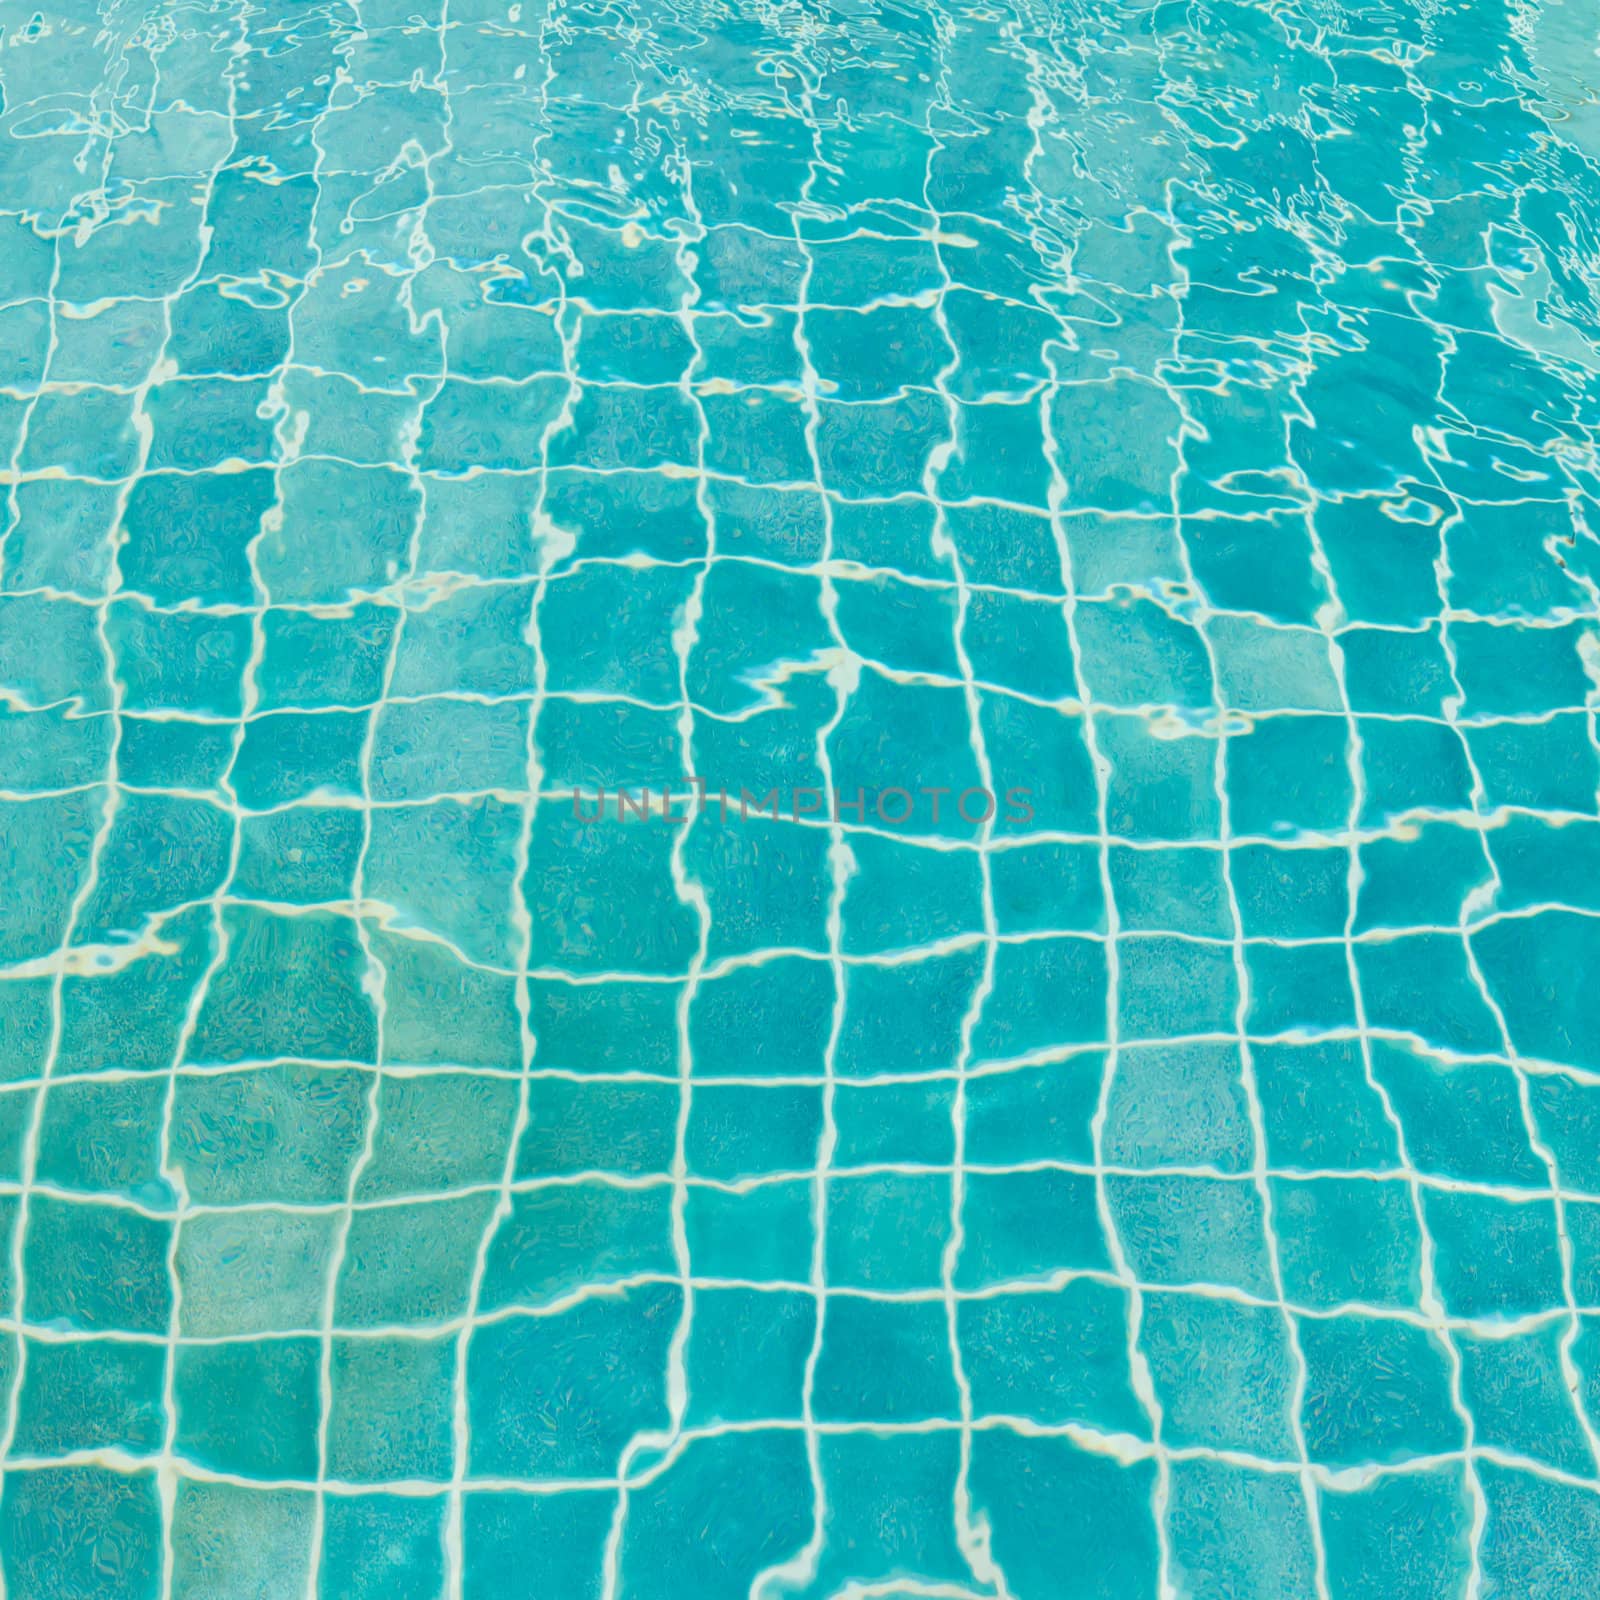 aqua blue tile in pool by tungphoto